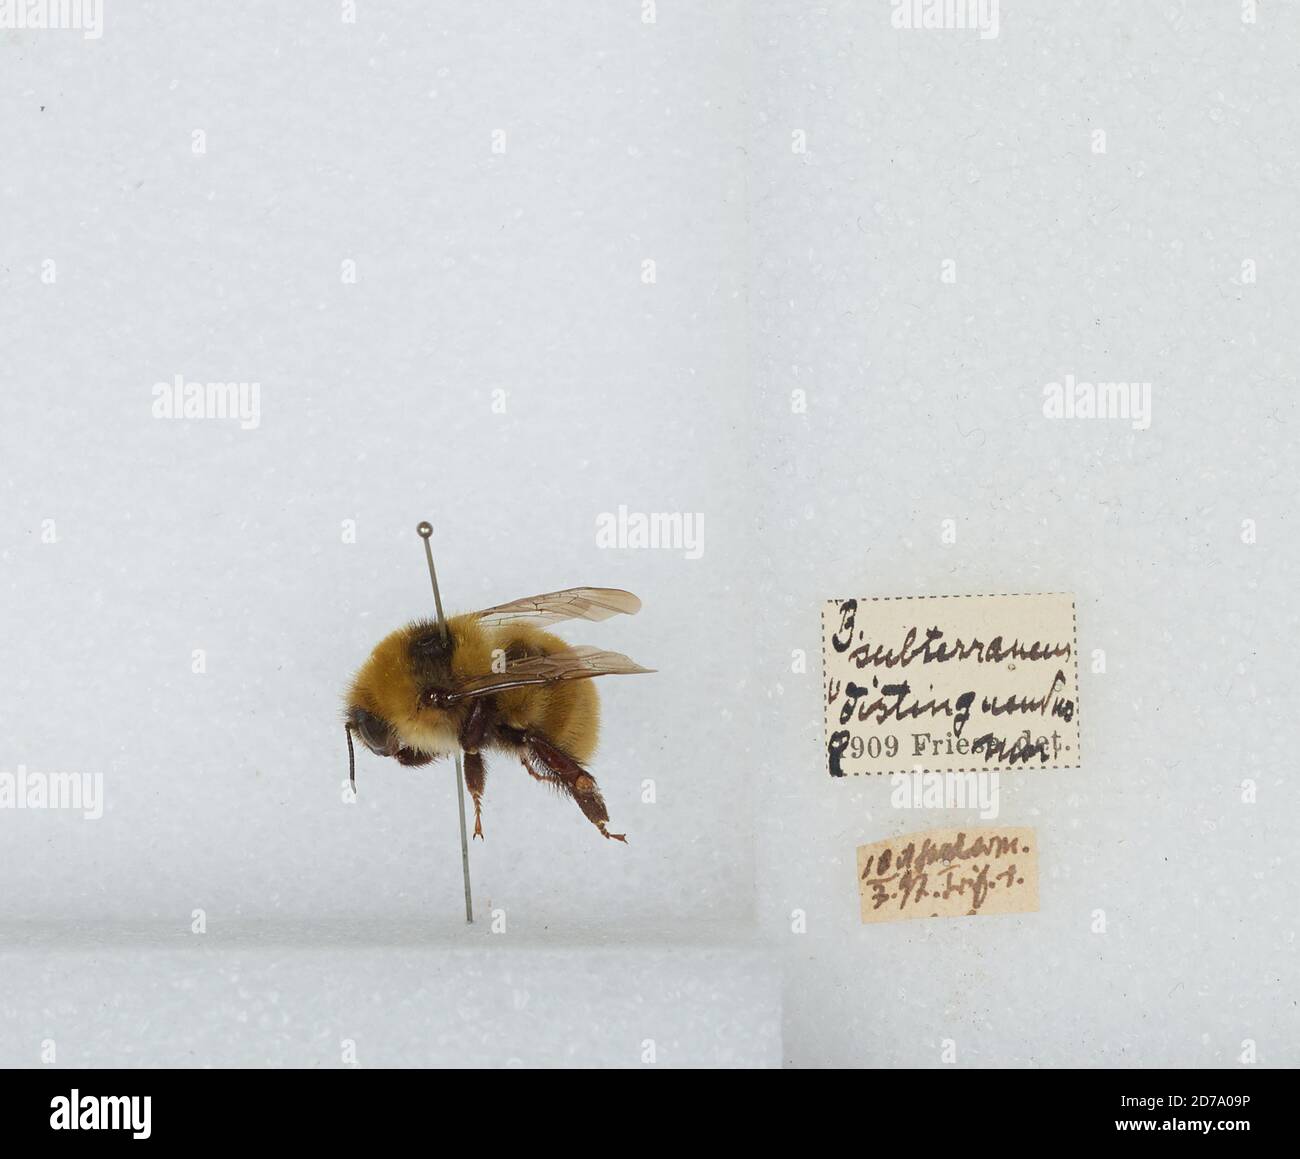 Bombus (Subterraneobombus) distinguendus Morawitz, Animalia, Arthropoda, Insecta, Hymenoptera, Apidae, Apinae Stock Photo